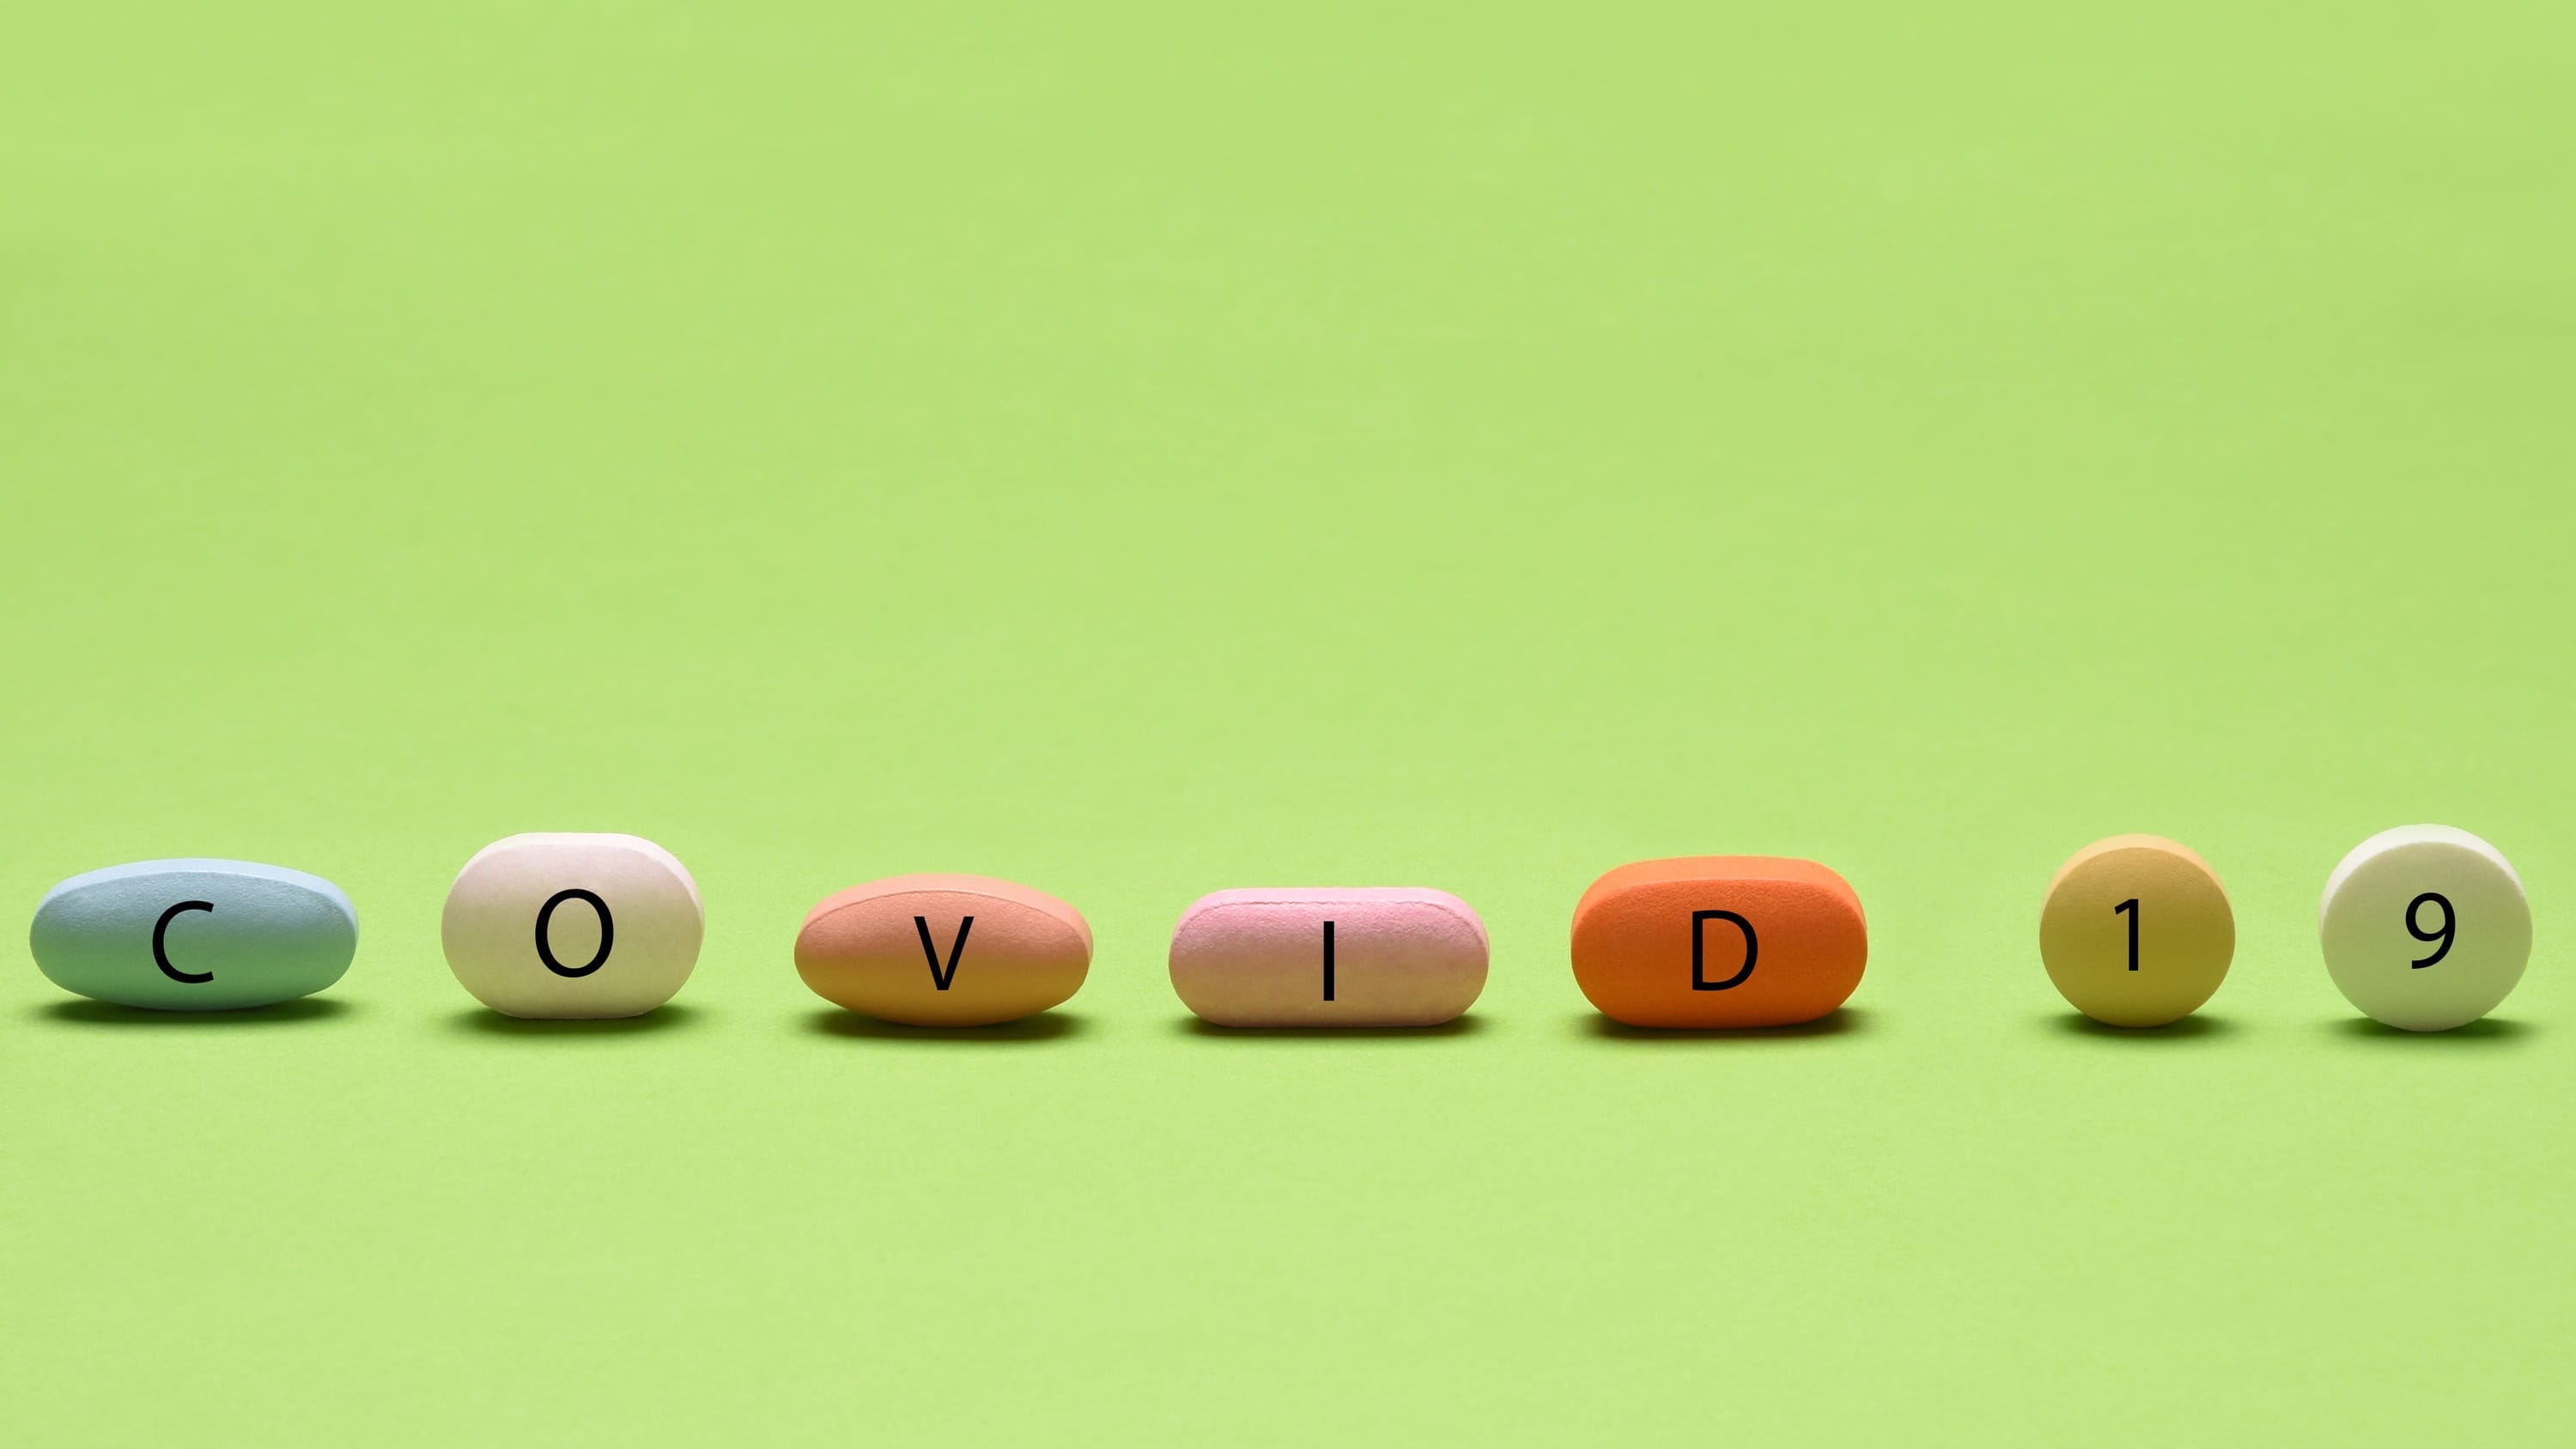 pills spelling covid, representing COVID-19 treatments